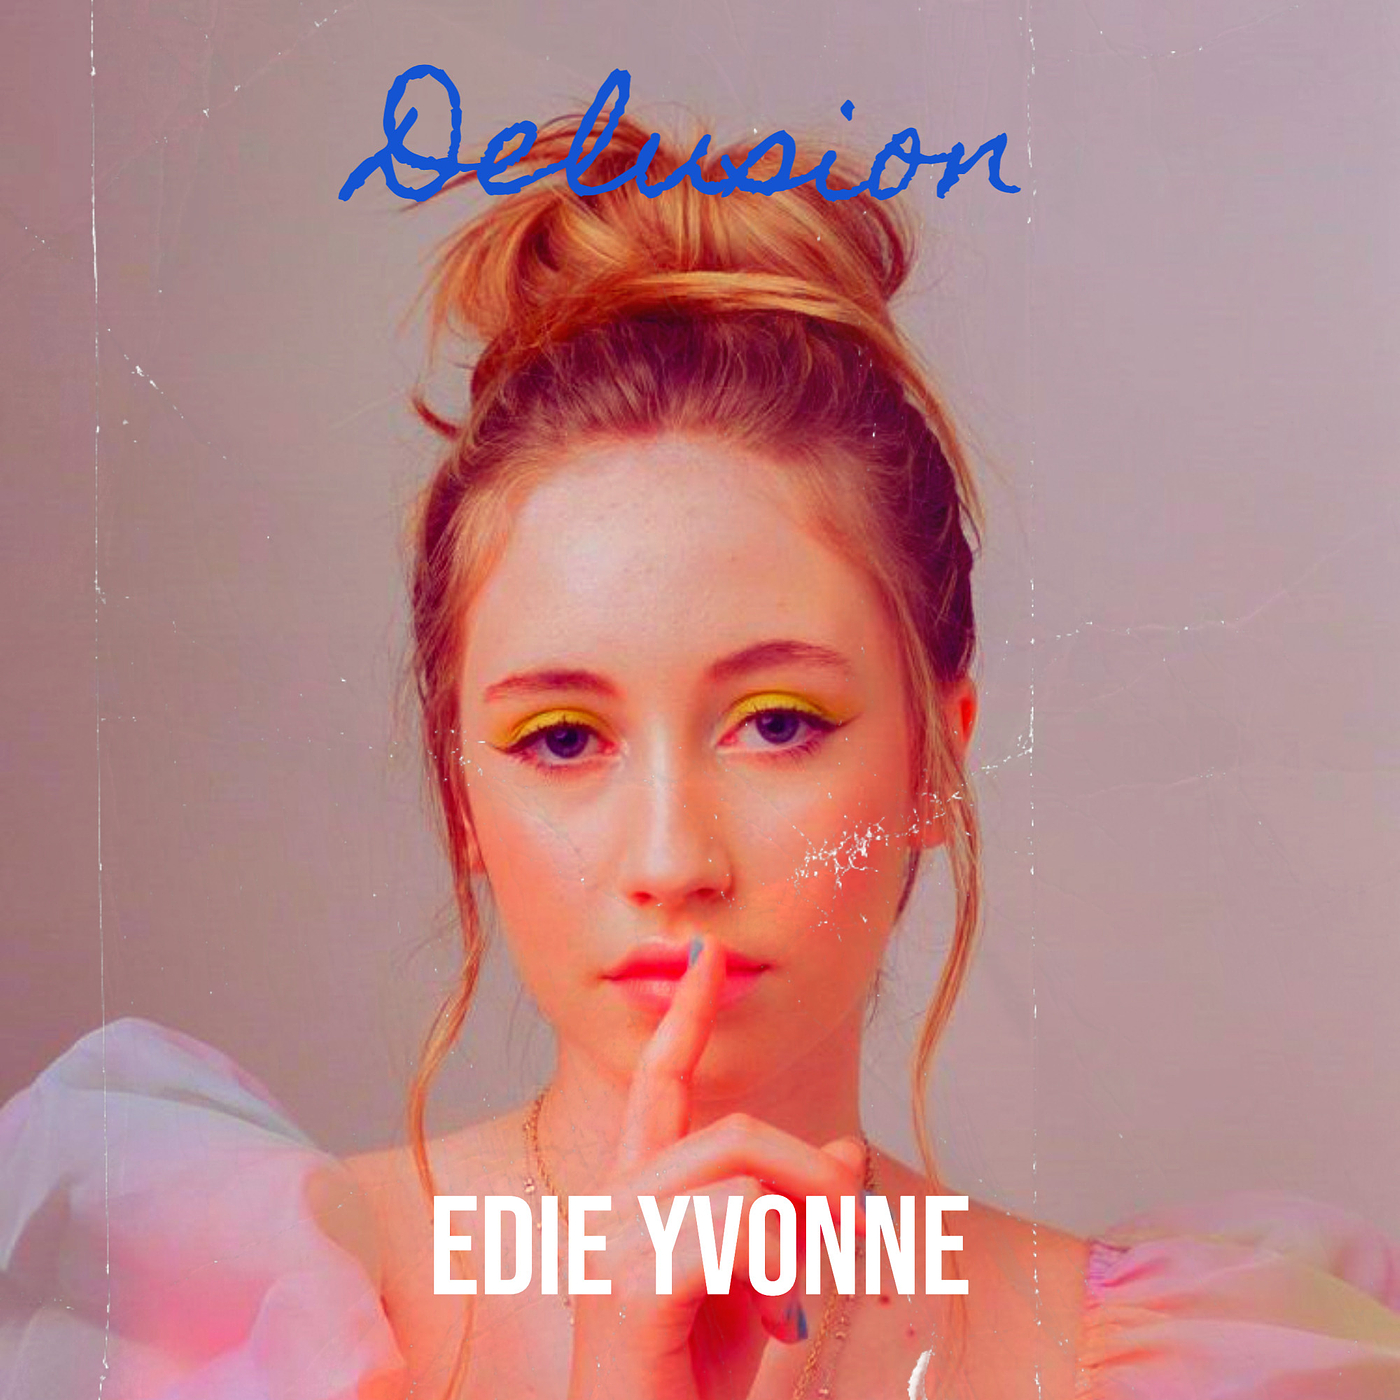 Edie Yvonne – “Delusion”